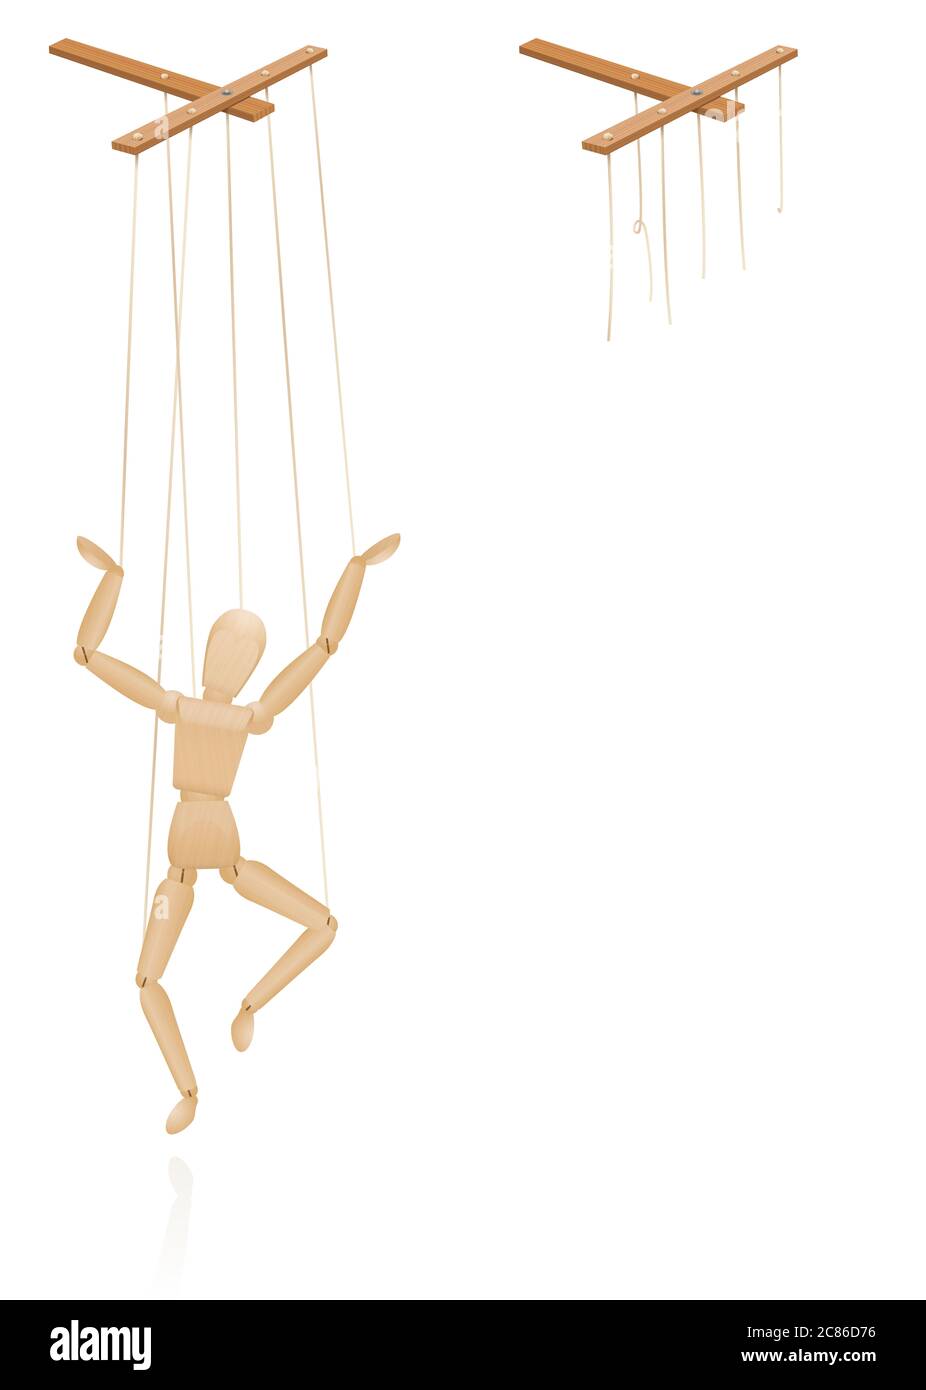 Títere en cuerdas. Barra de control de marionetas con cuerdas intactas y rotas. Las cuerdas rotas como símbolo de libertad, independencia, autonomía, libertad. Foto de stock